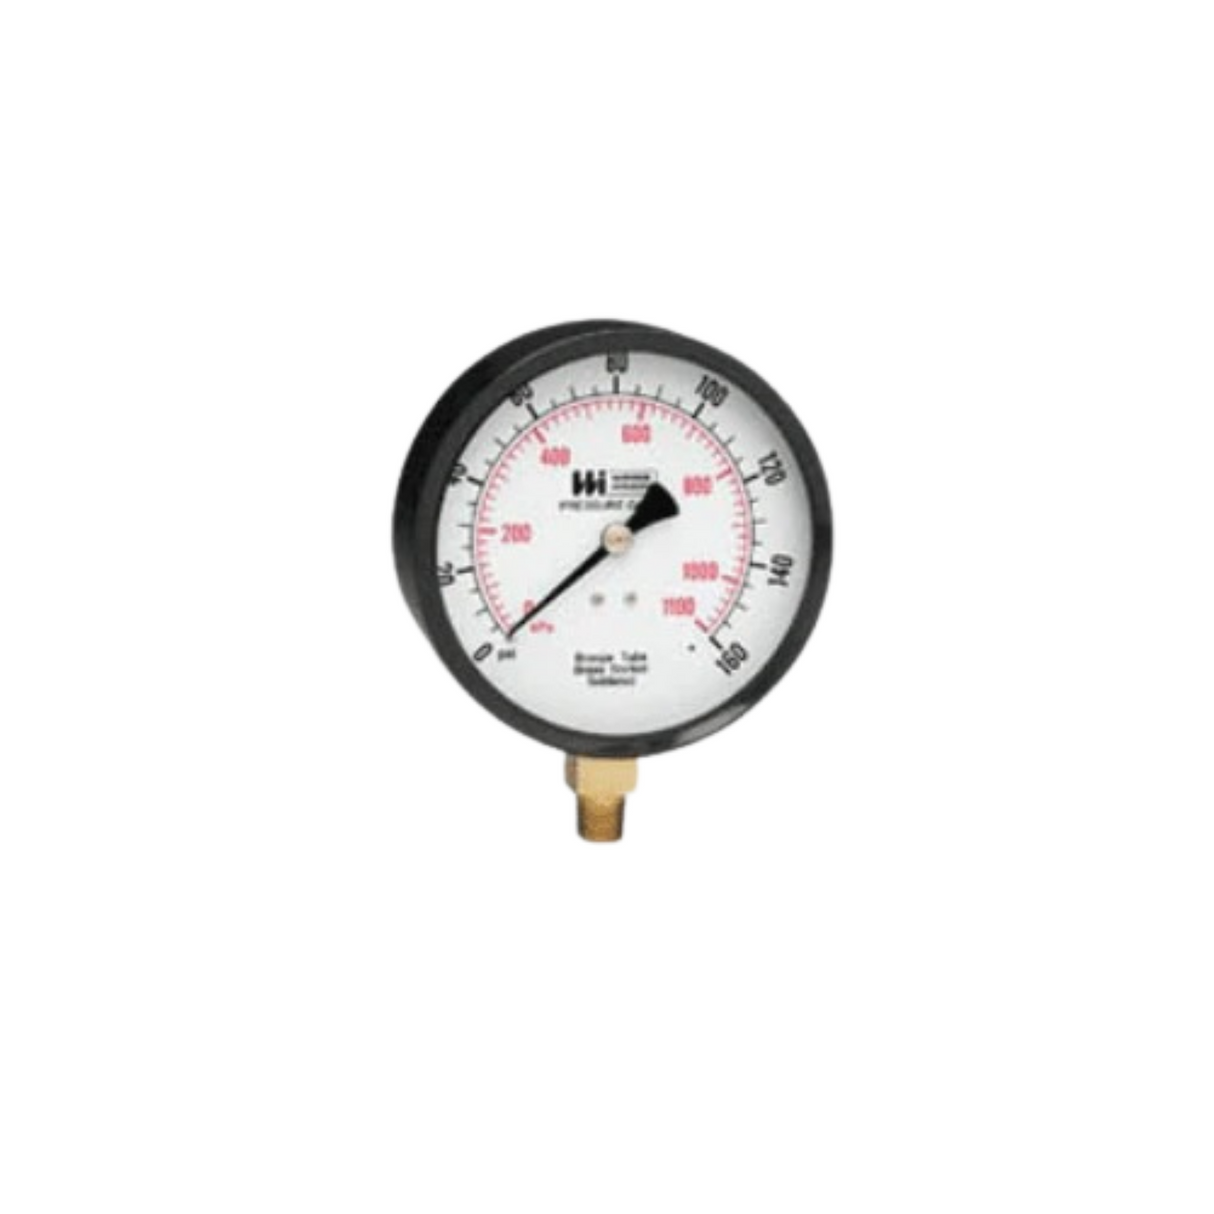 Weiss Instruments TL40-100 General Purpose Pressure Gauge